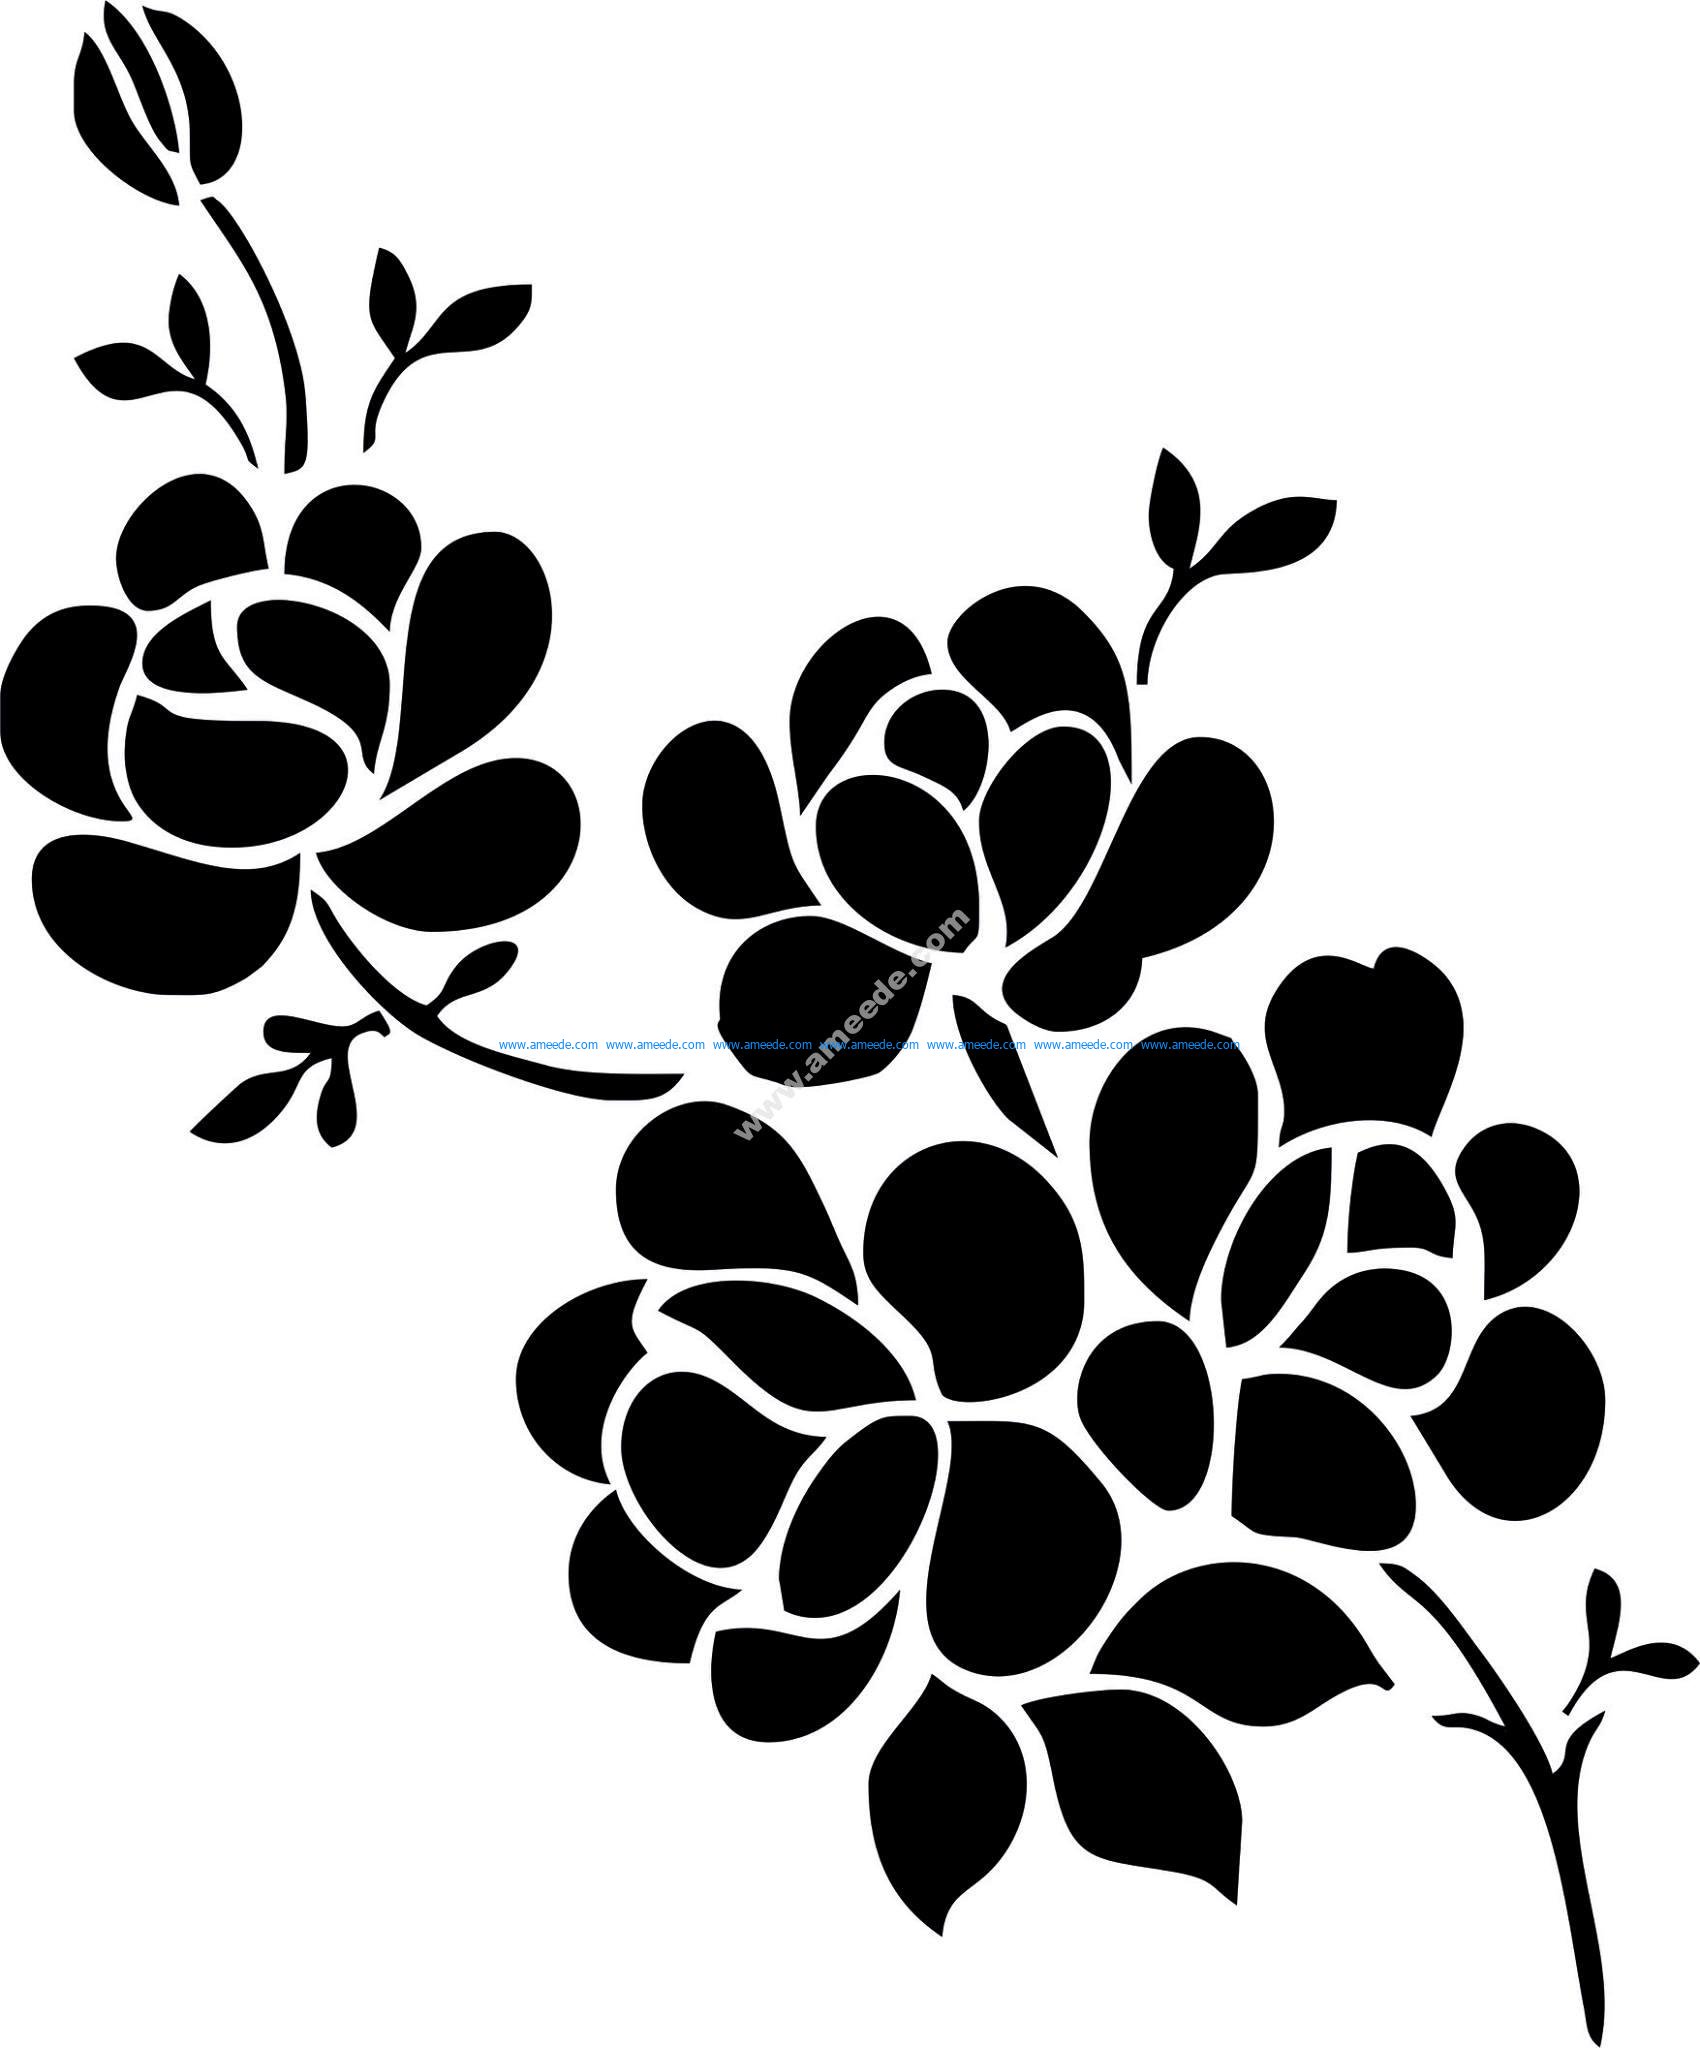 Download Elegant Black And White Flower Vector Art jpg - Download ...